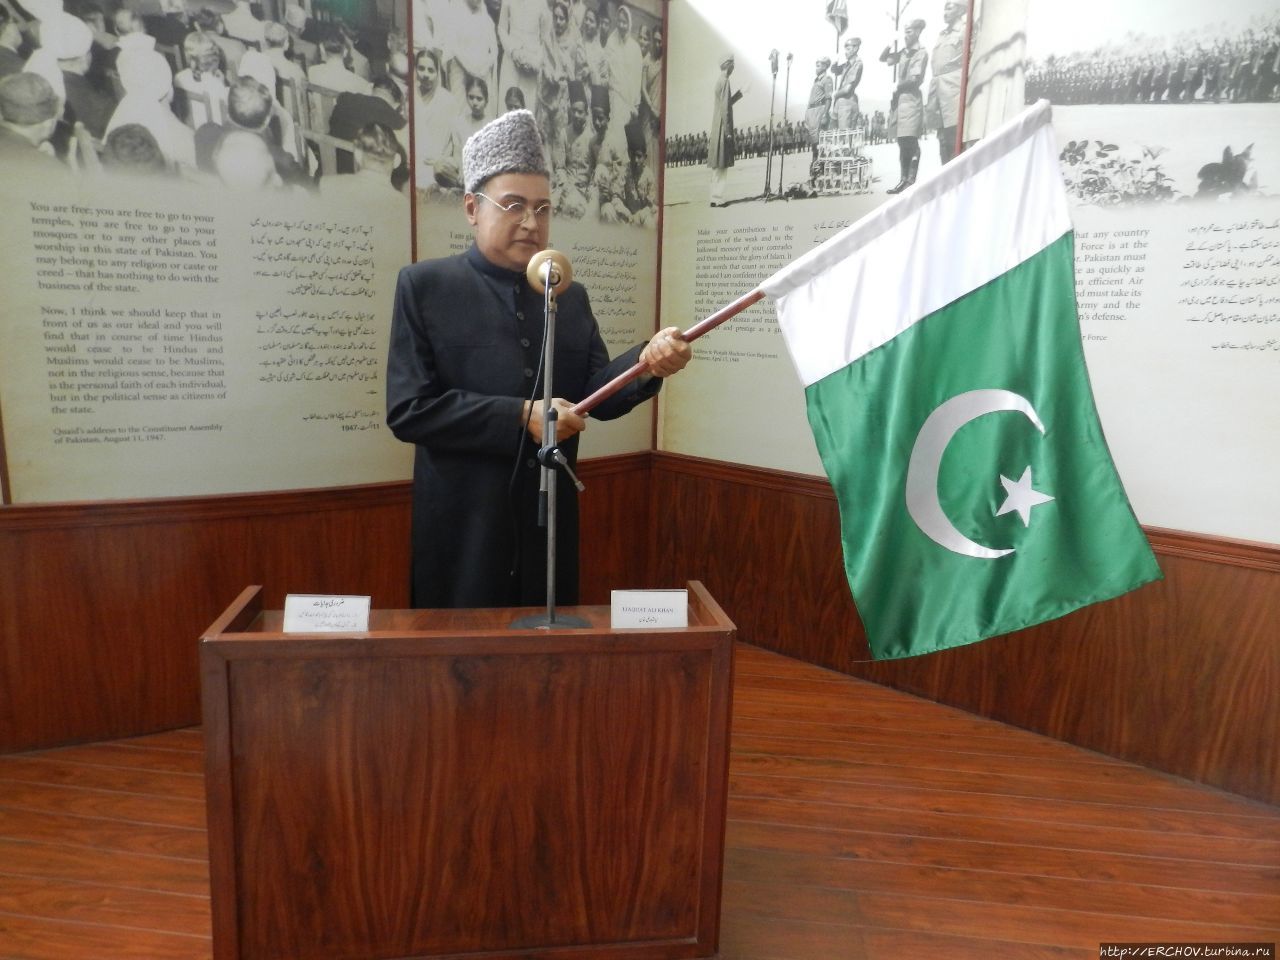 Пакистан.Ч-14. Первез Мушарраф и музей Пакистанский Монумент Исламабад, Пакистан